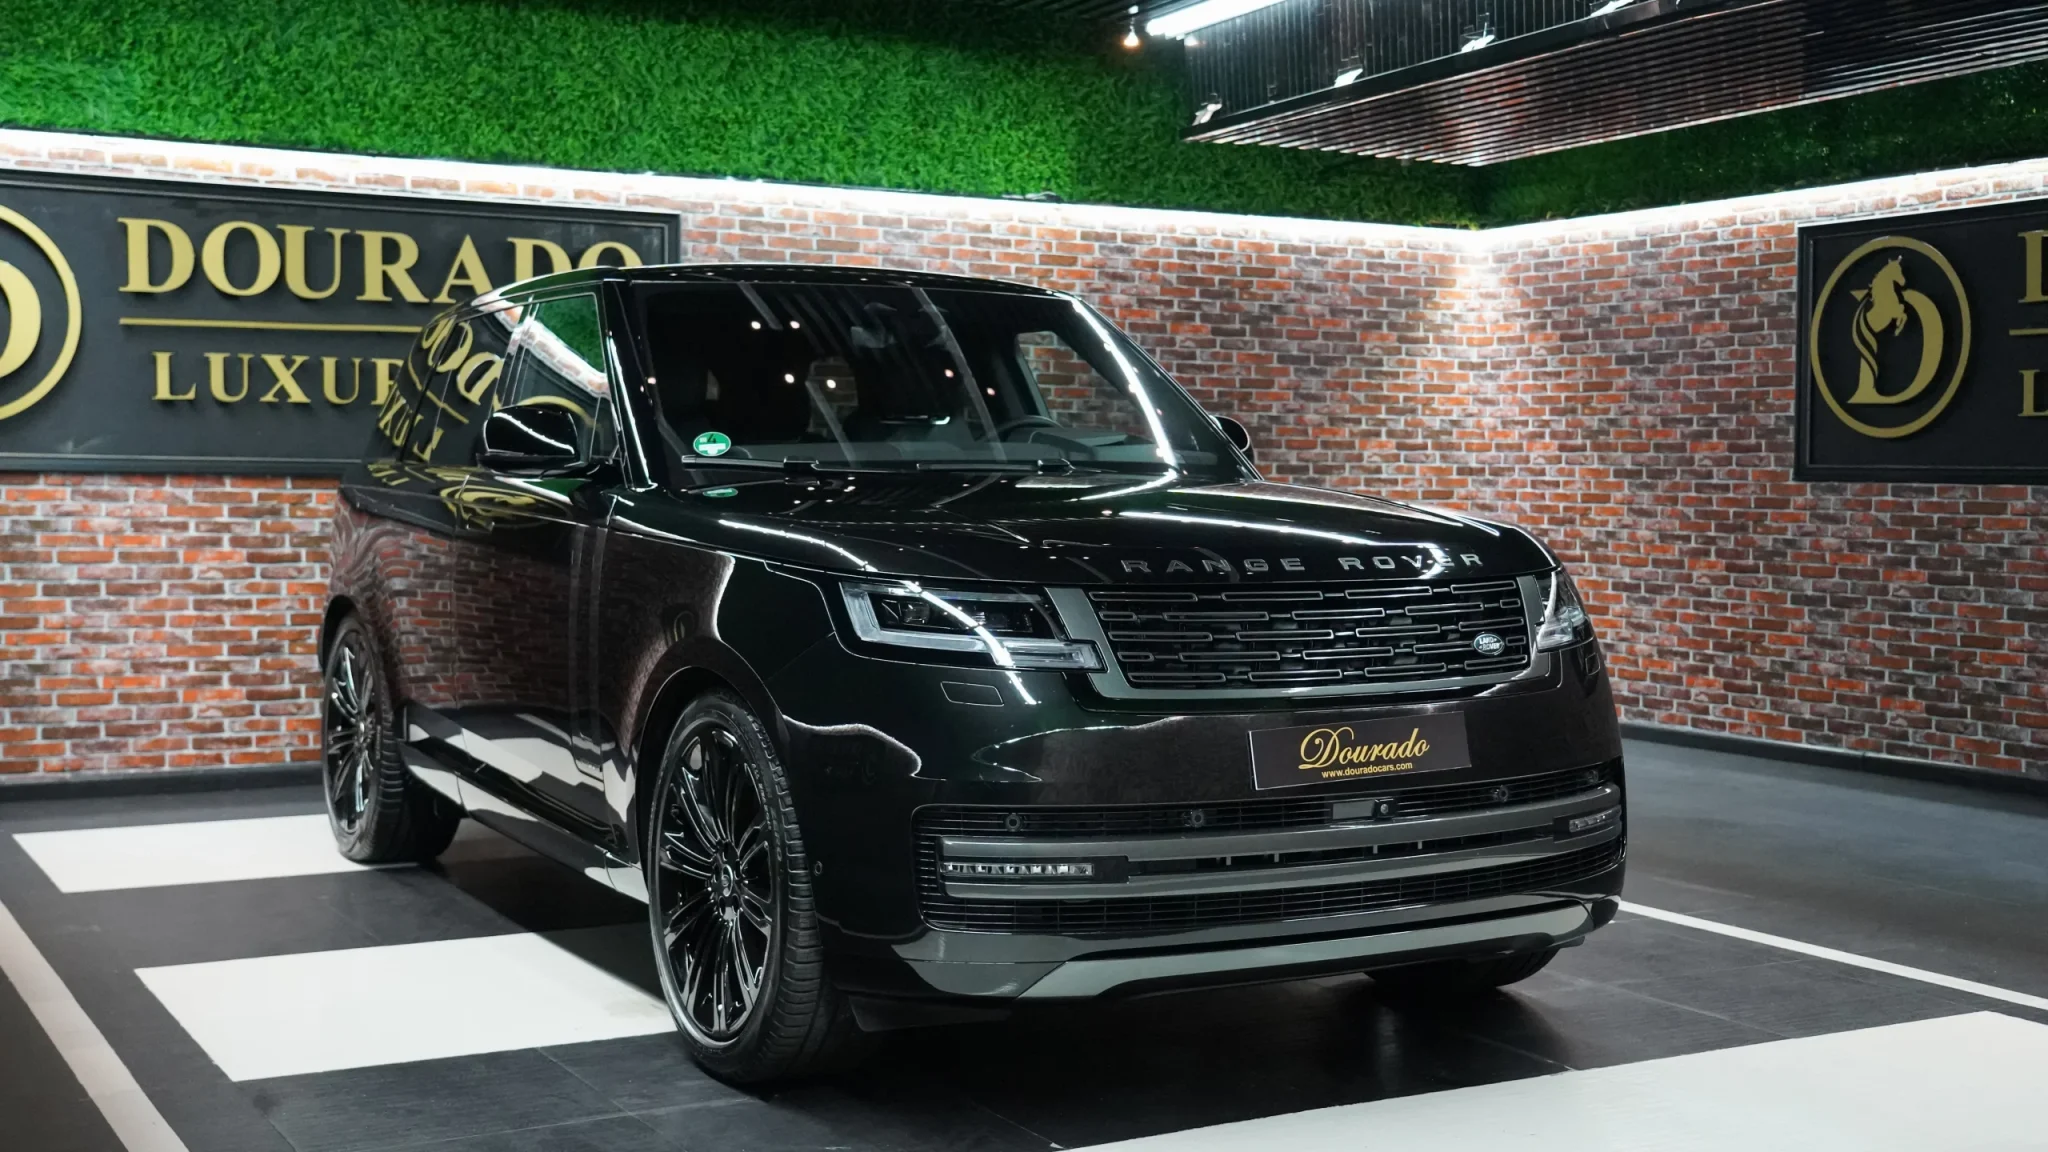 Range Rover Sport Price in UAE: Luxury SUV Ownership Costs - Dourado ...